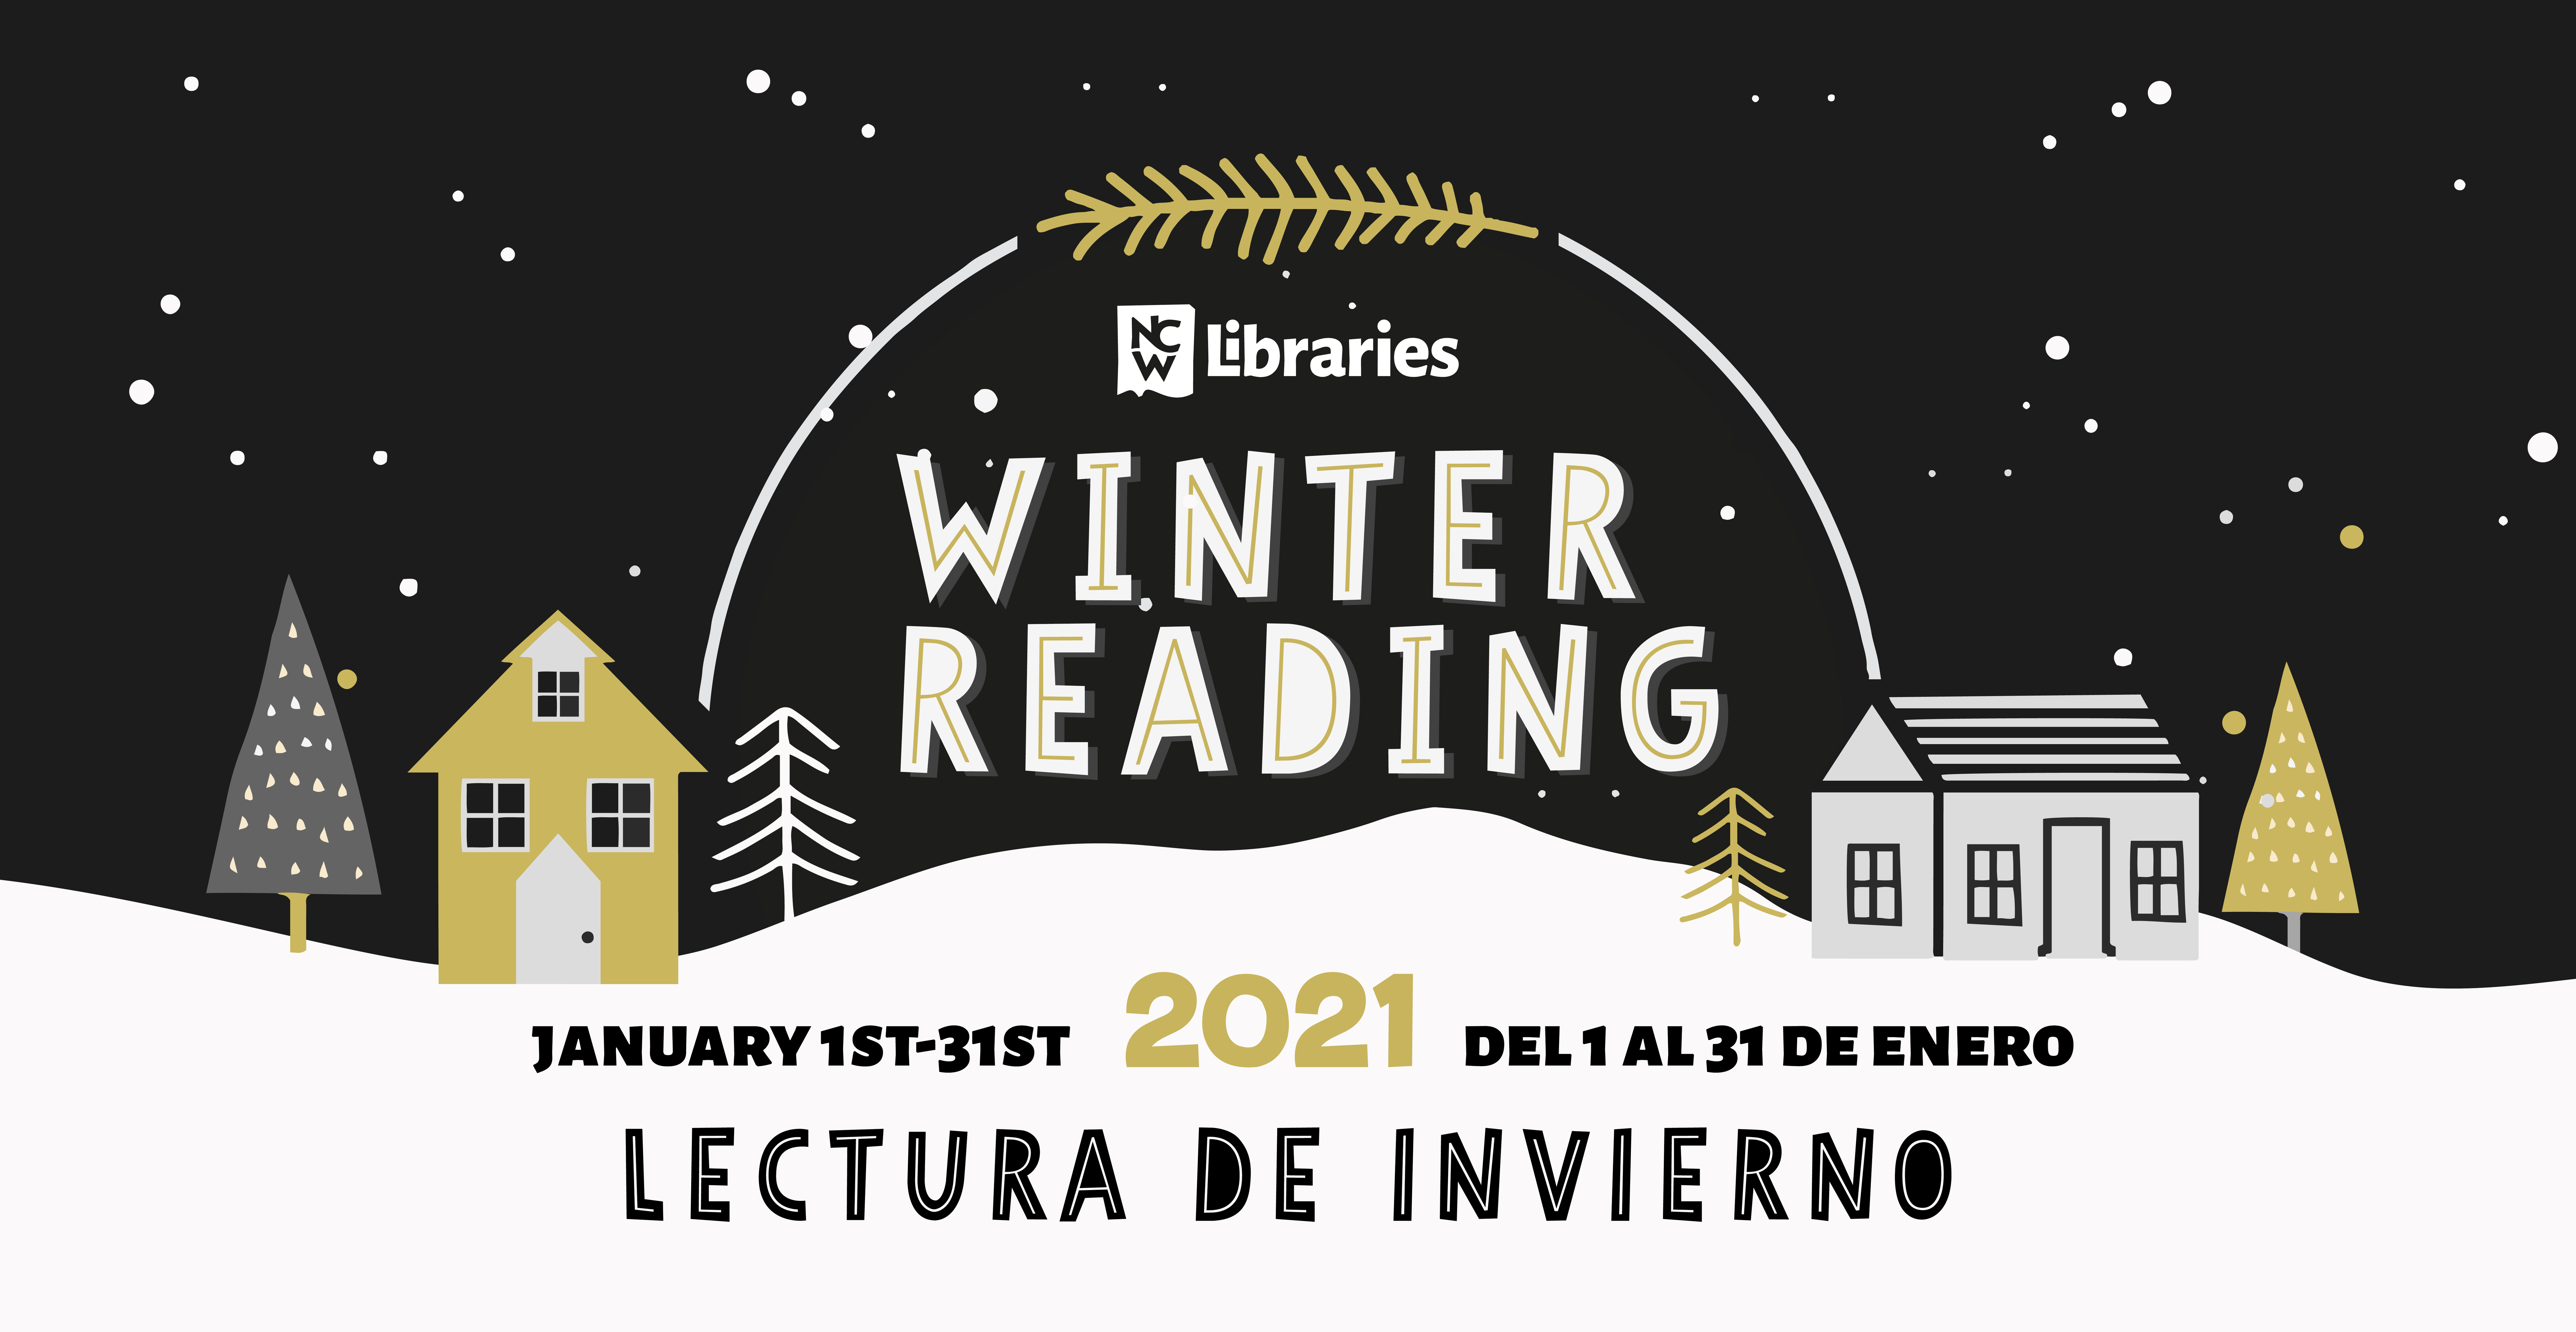 One More Week Of Winter Reading Program